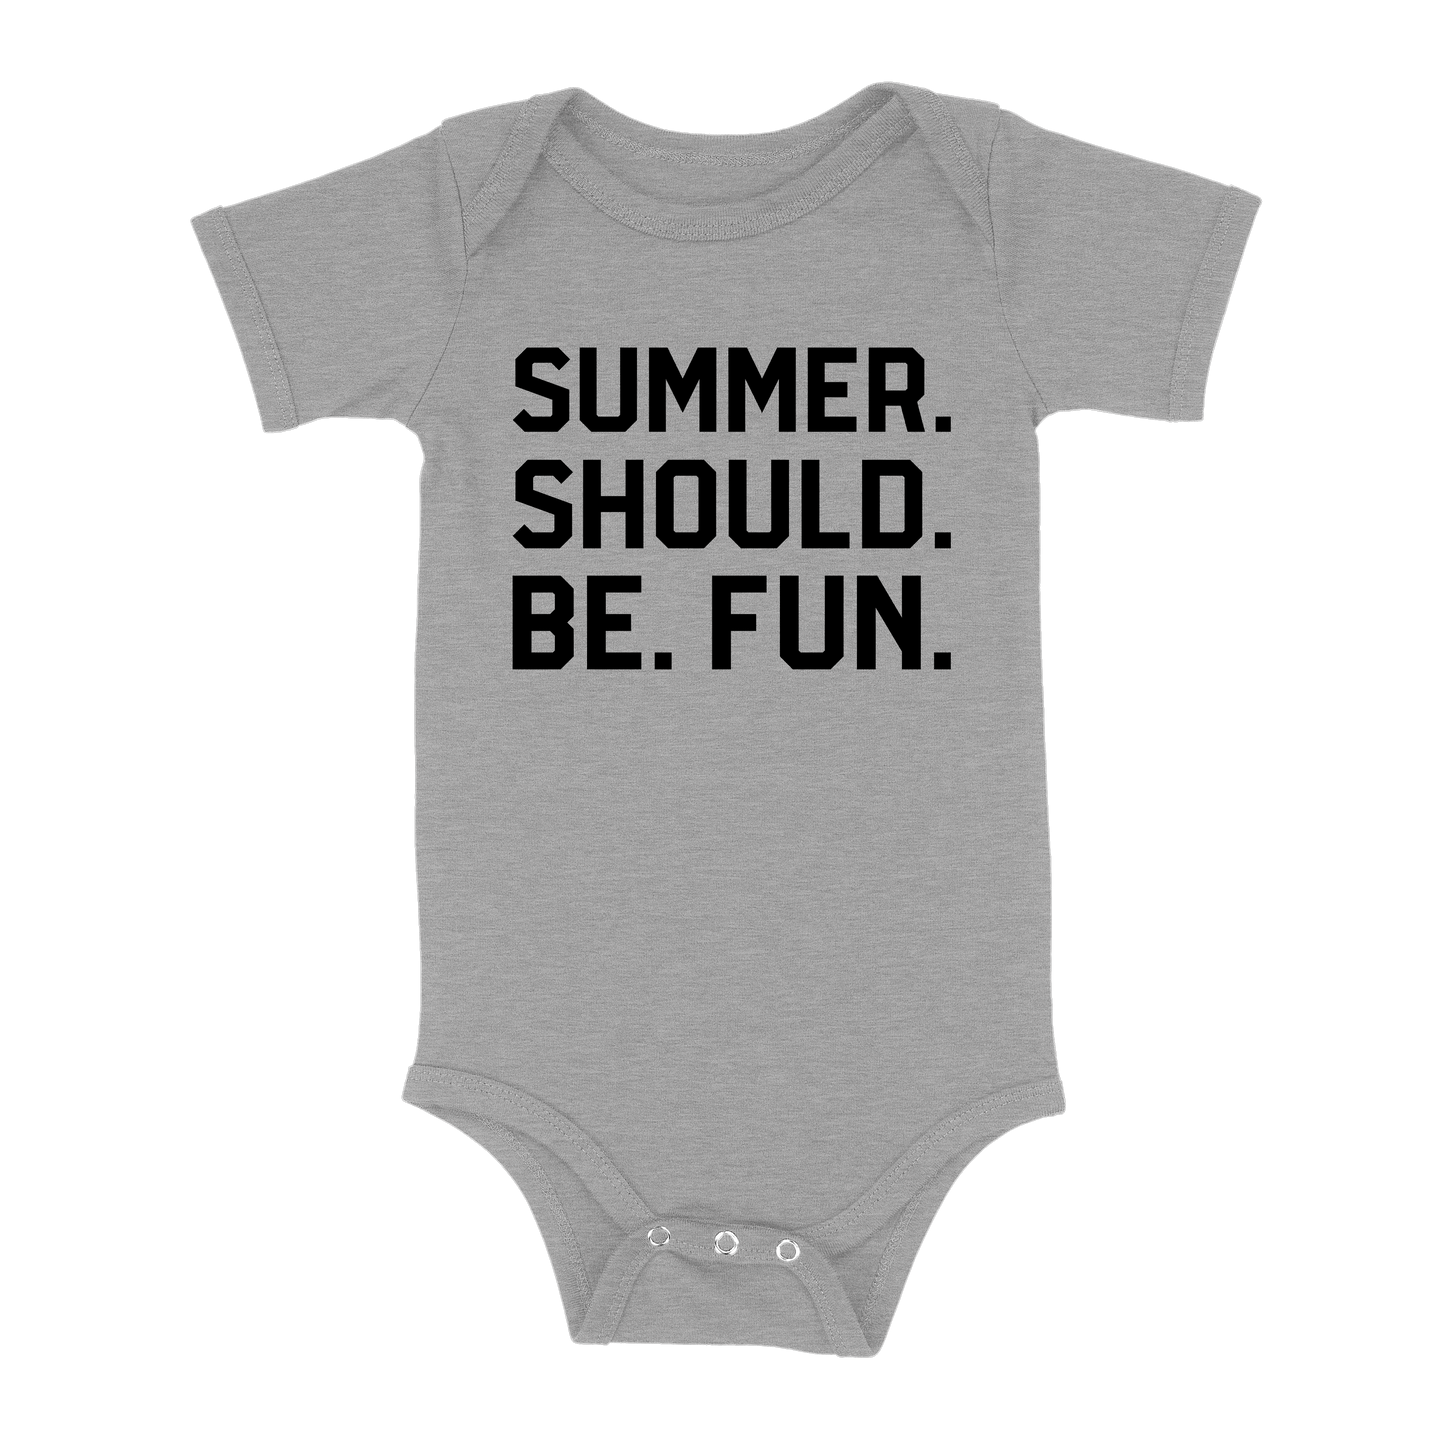 Summer. Should. Be. Fun. Baby - Grey